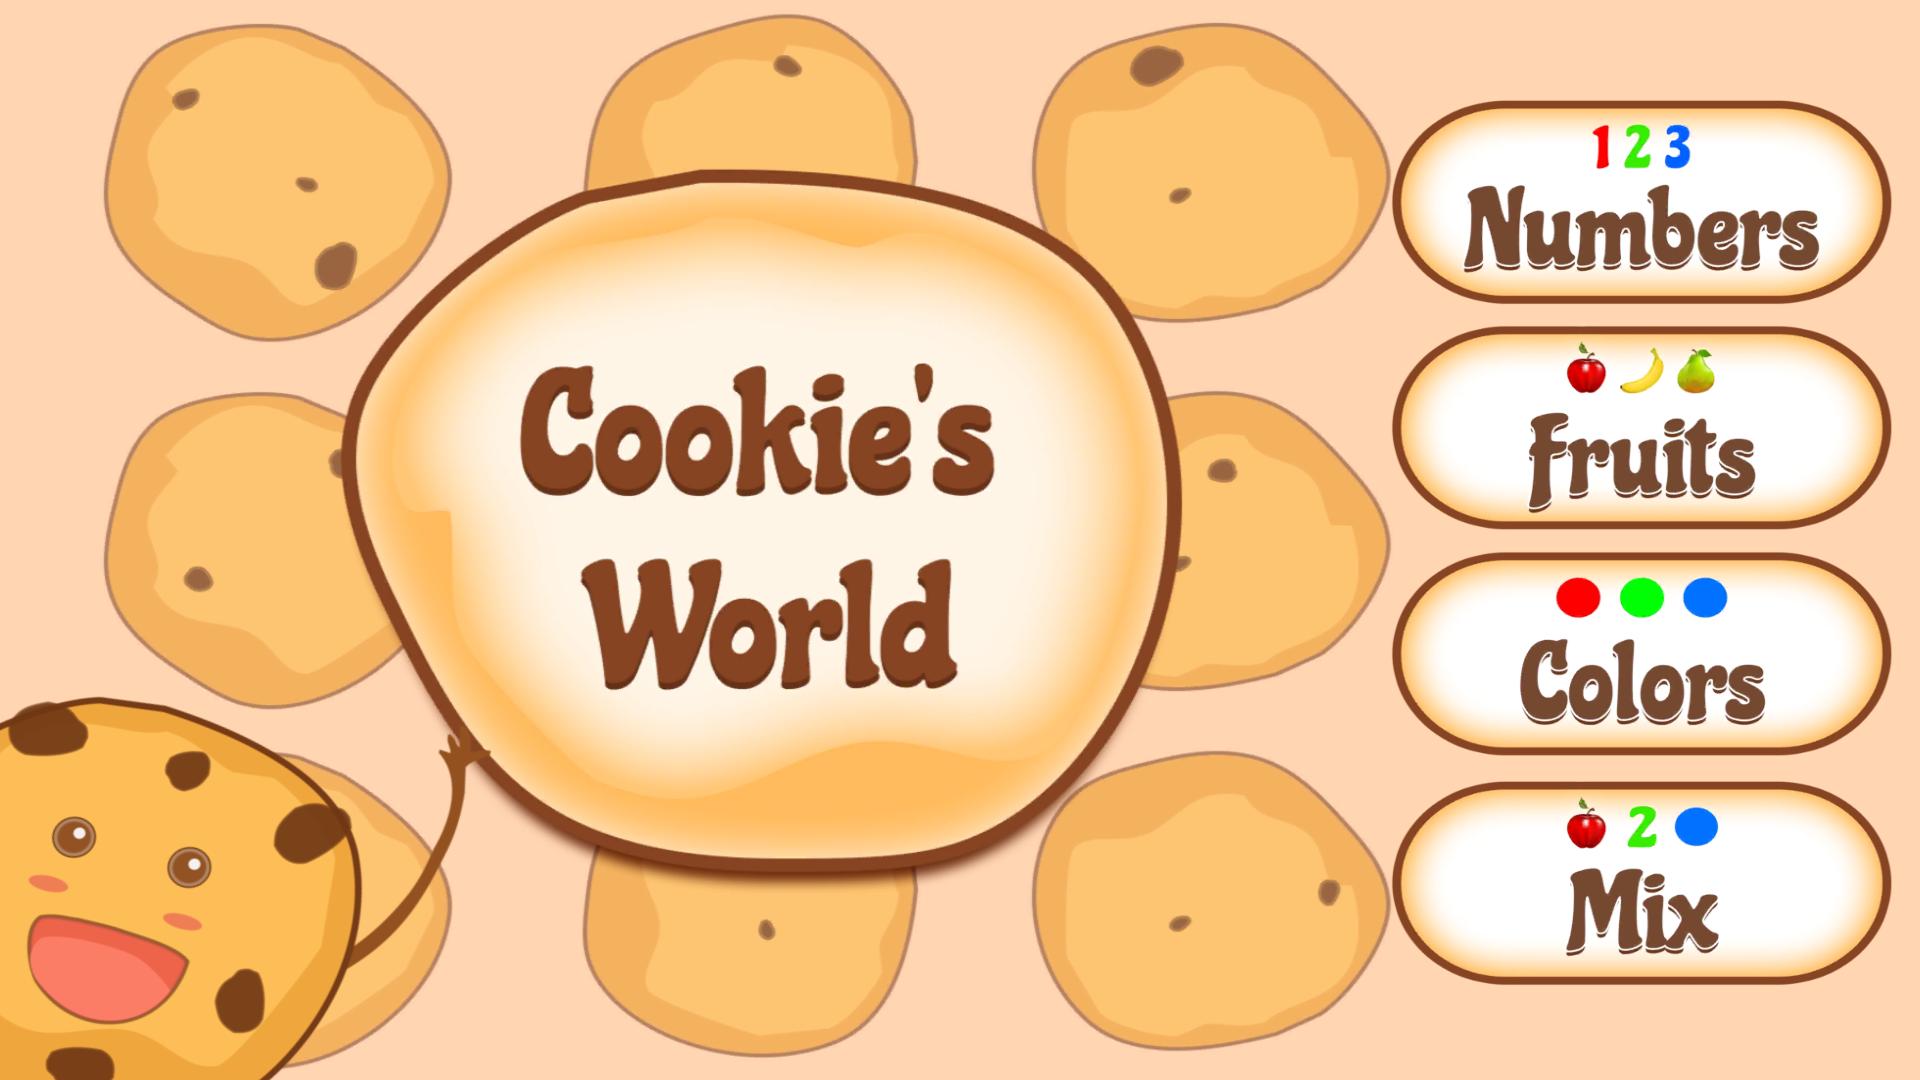 Cookieless World. Cookies World girls hot. Cookies games